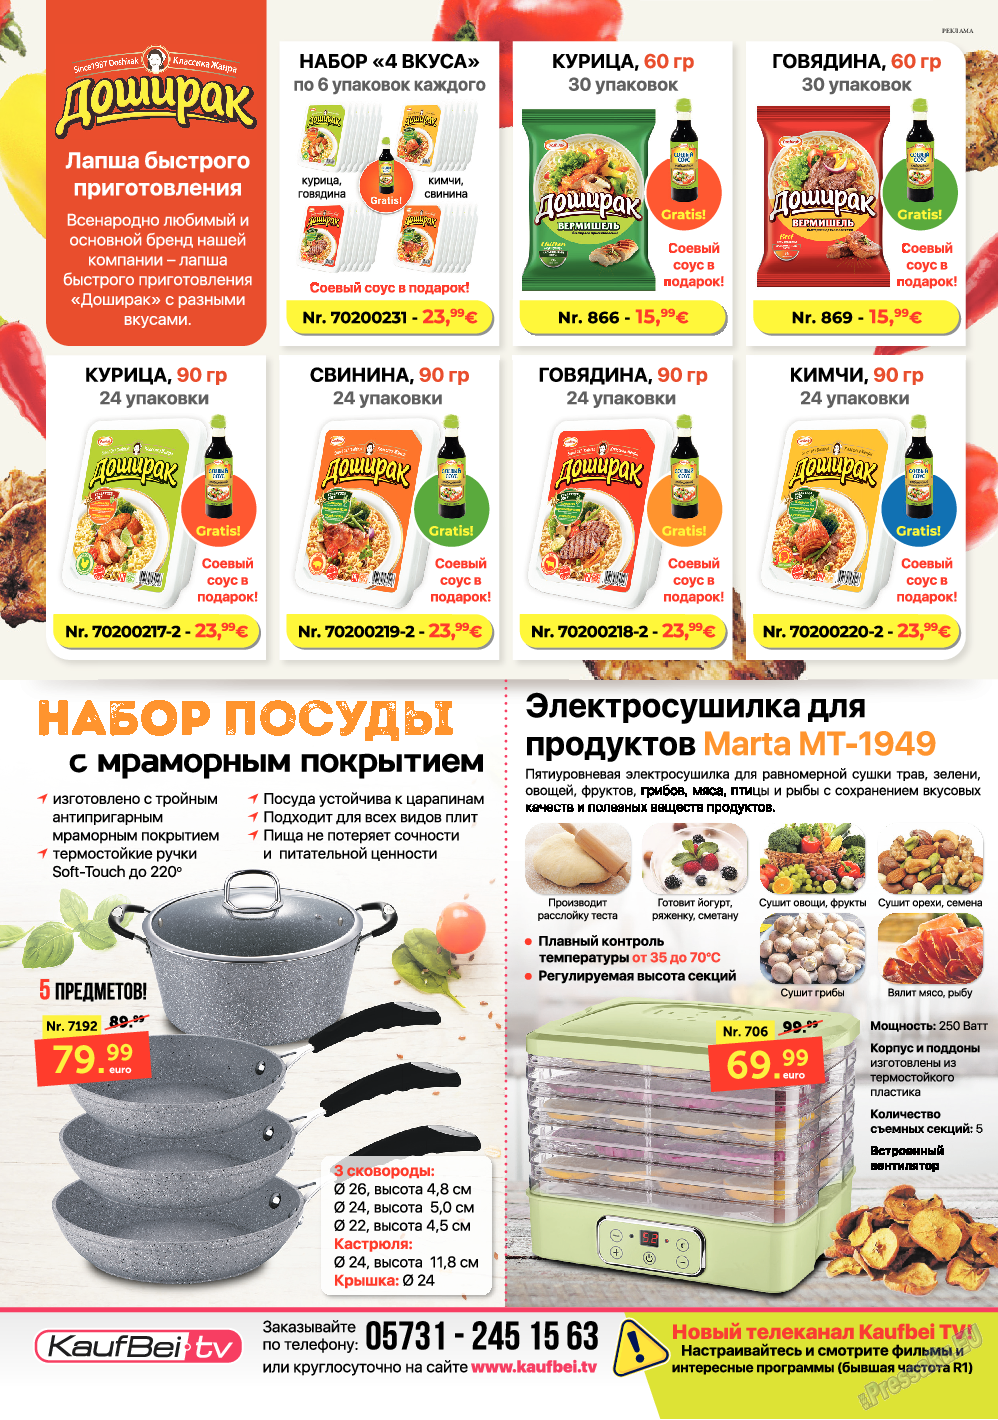 Домашний кулинар (журнал). 2020 год, номер 4, стр. 72